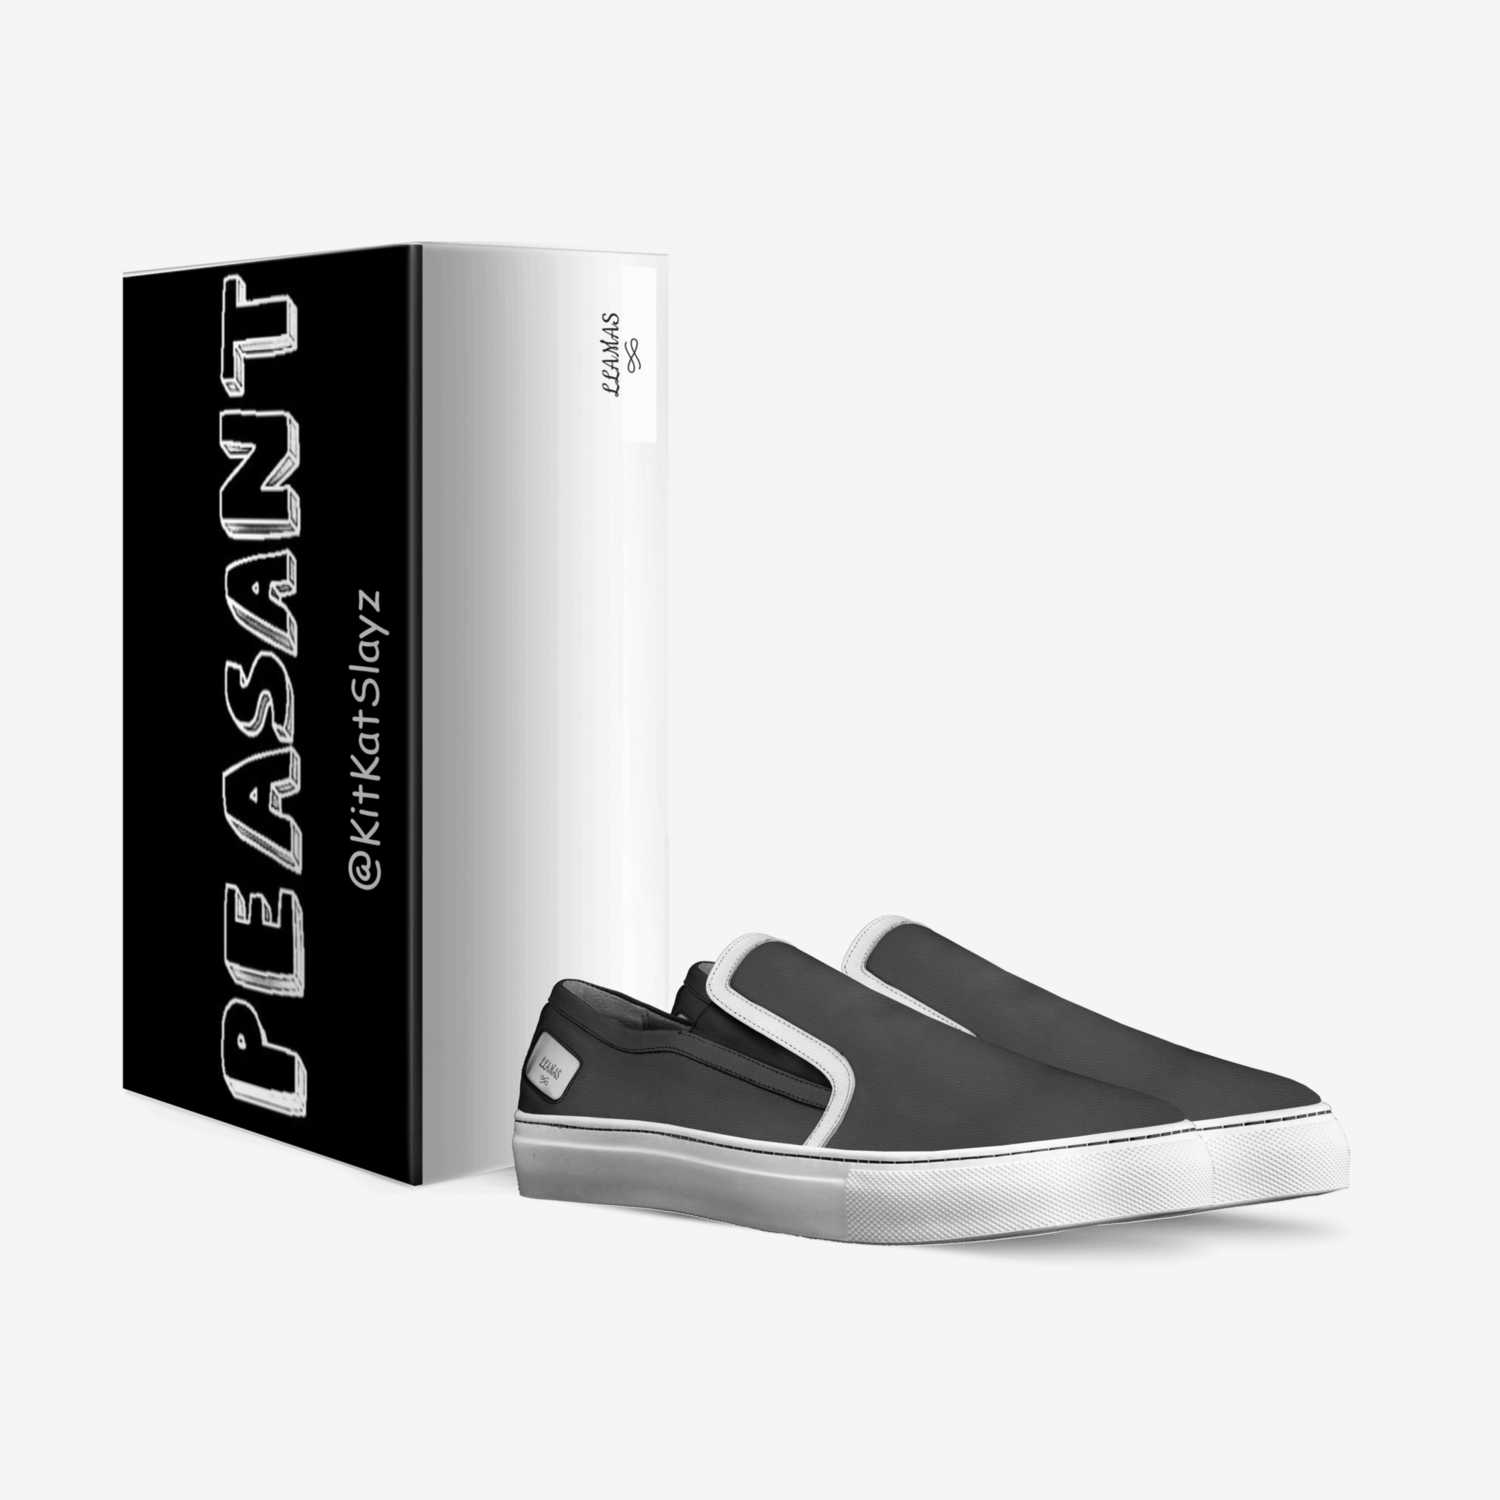 LLAMAS custom made in Italy shoes by Bean | Box view